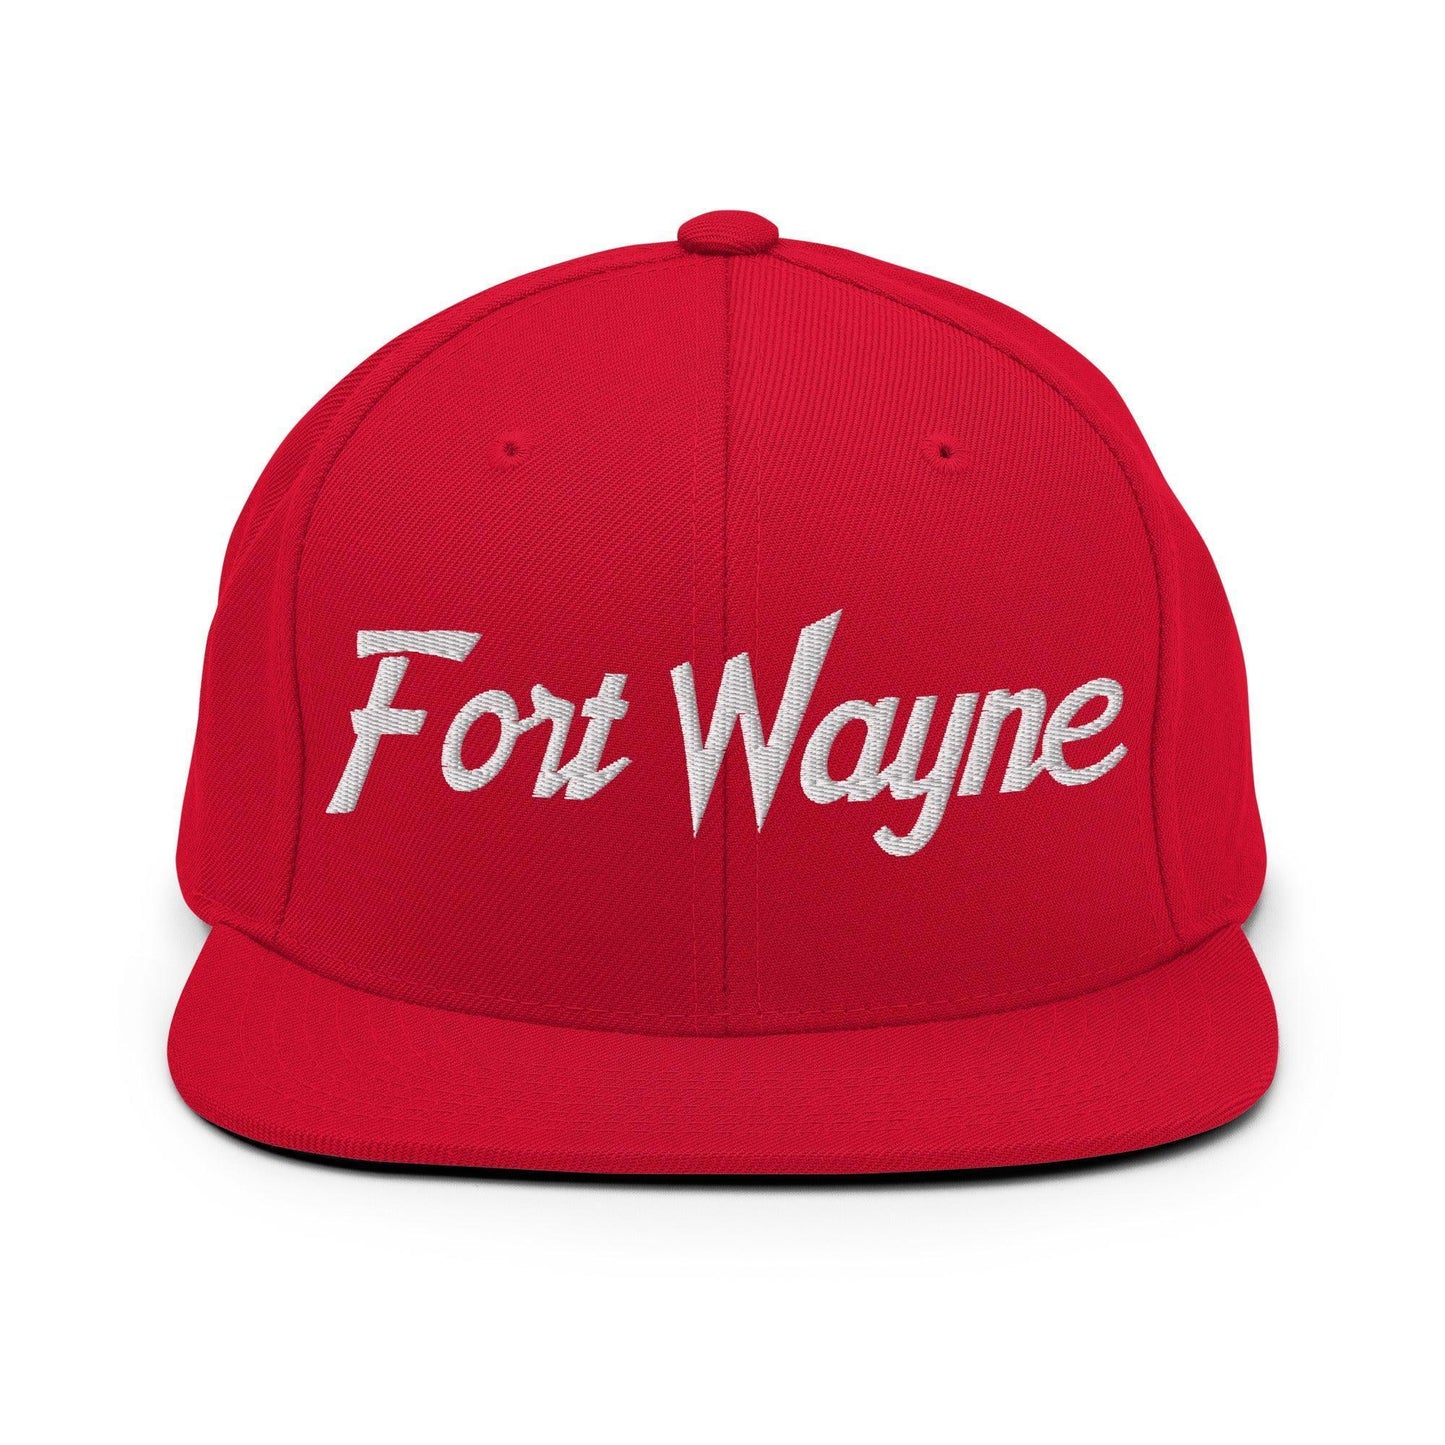 Fort Wayne Script Snapback Hat Red